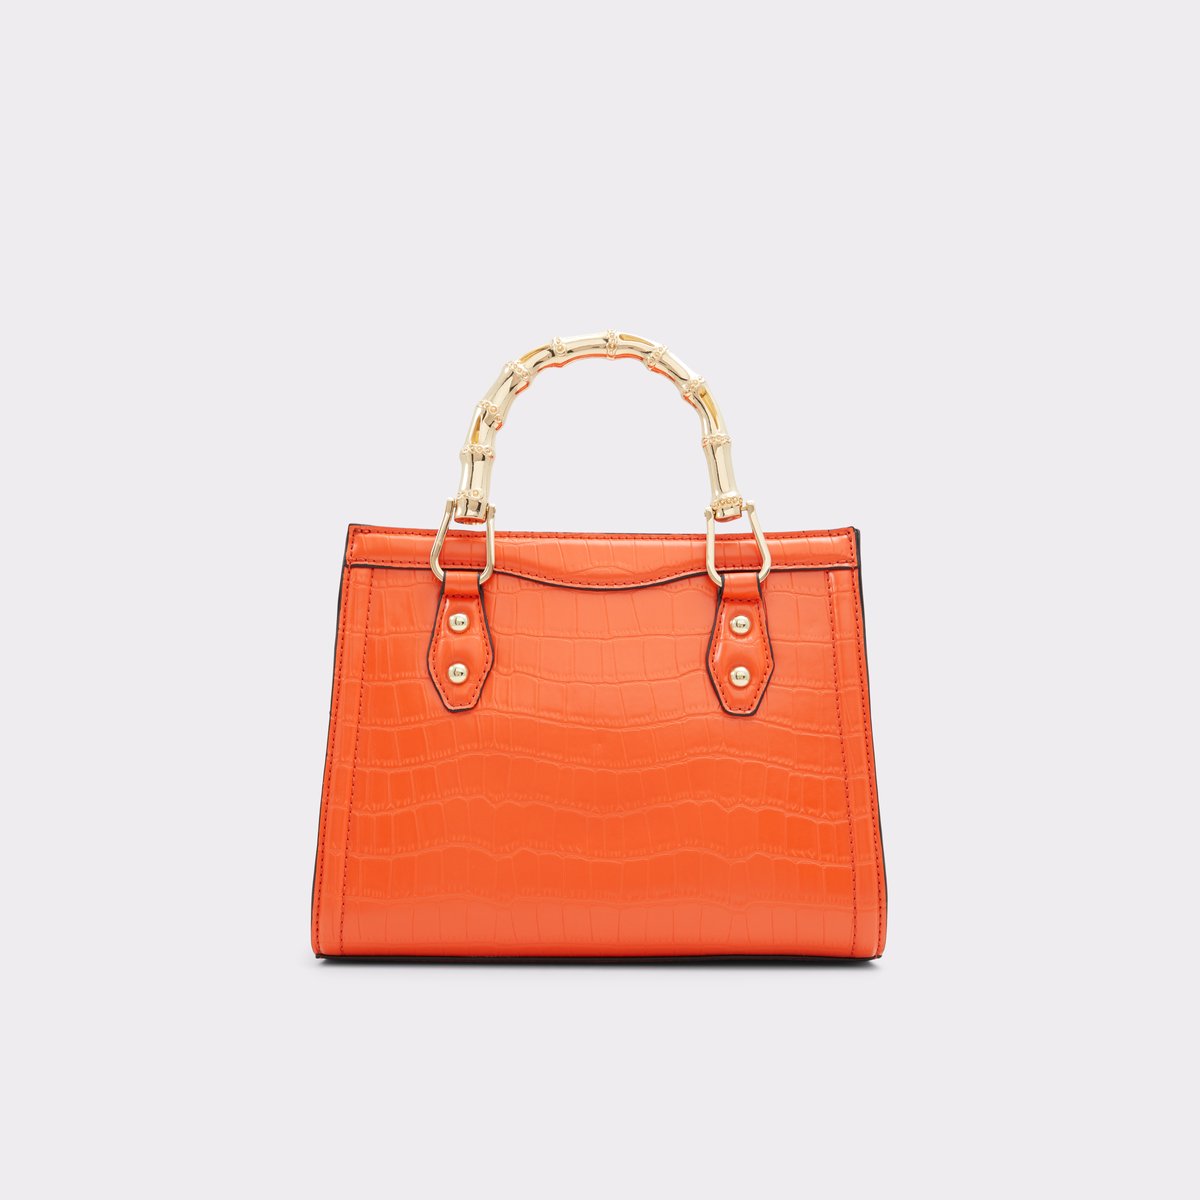 Aldo Bags & Handbags for Women for sale